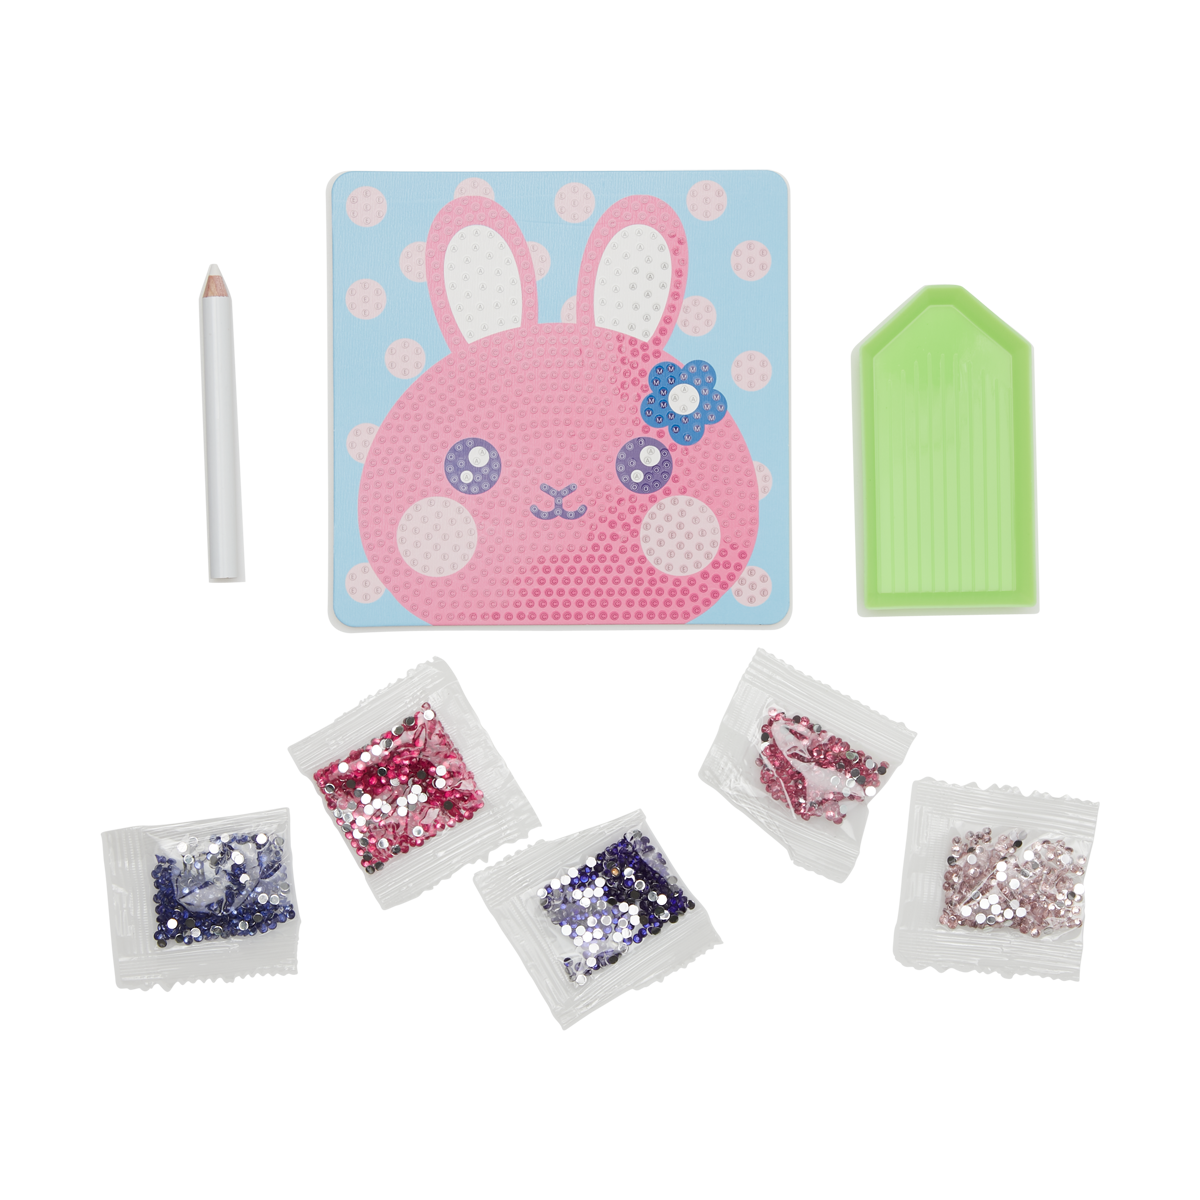 OOLY view of Razzle Dazzle DIY Gem Art Kit - Bouncy Bunny contents